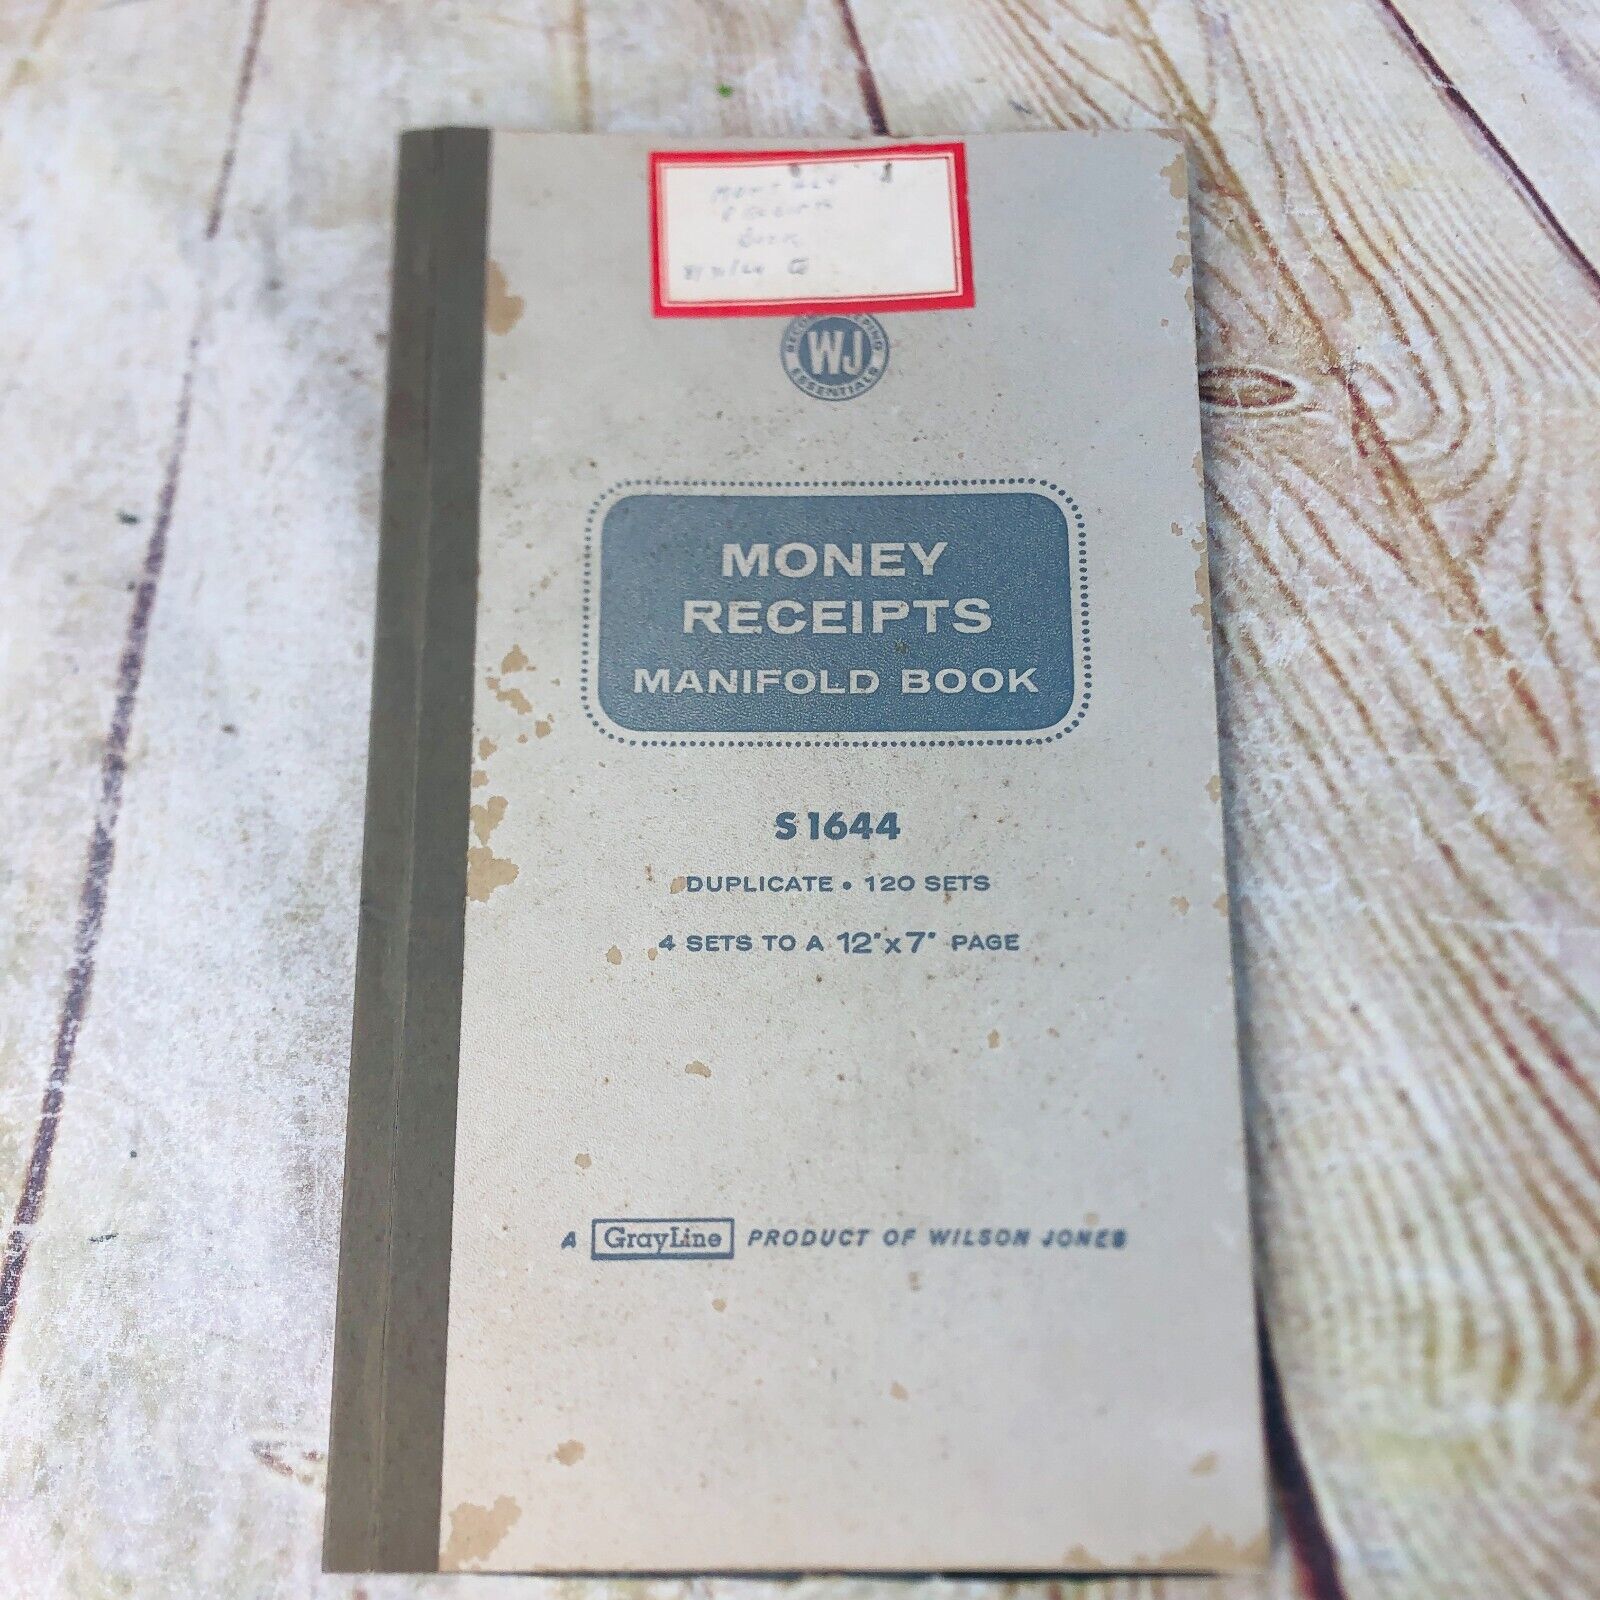 vtg Money receipts book Manifold book 1964 1965 all used  ephemera junk journal